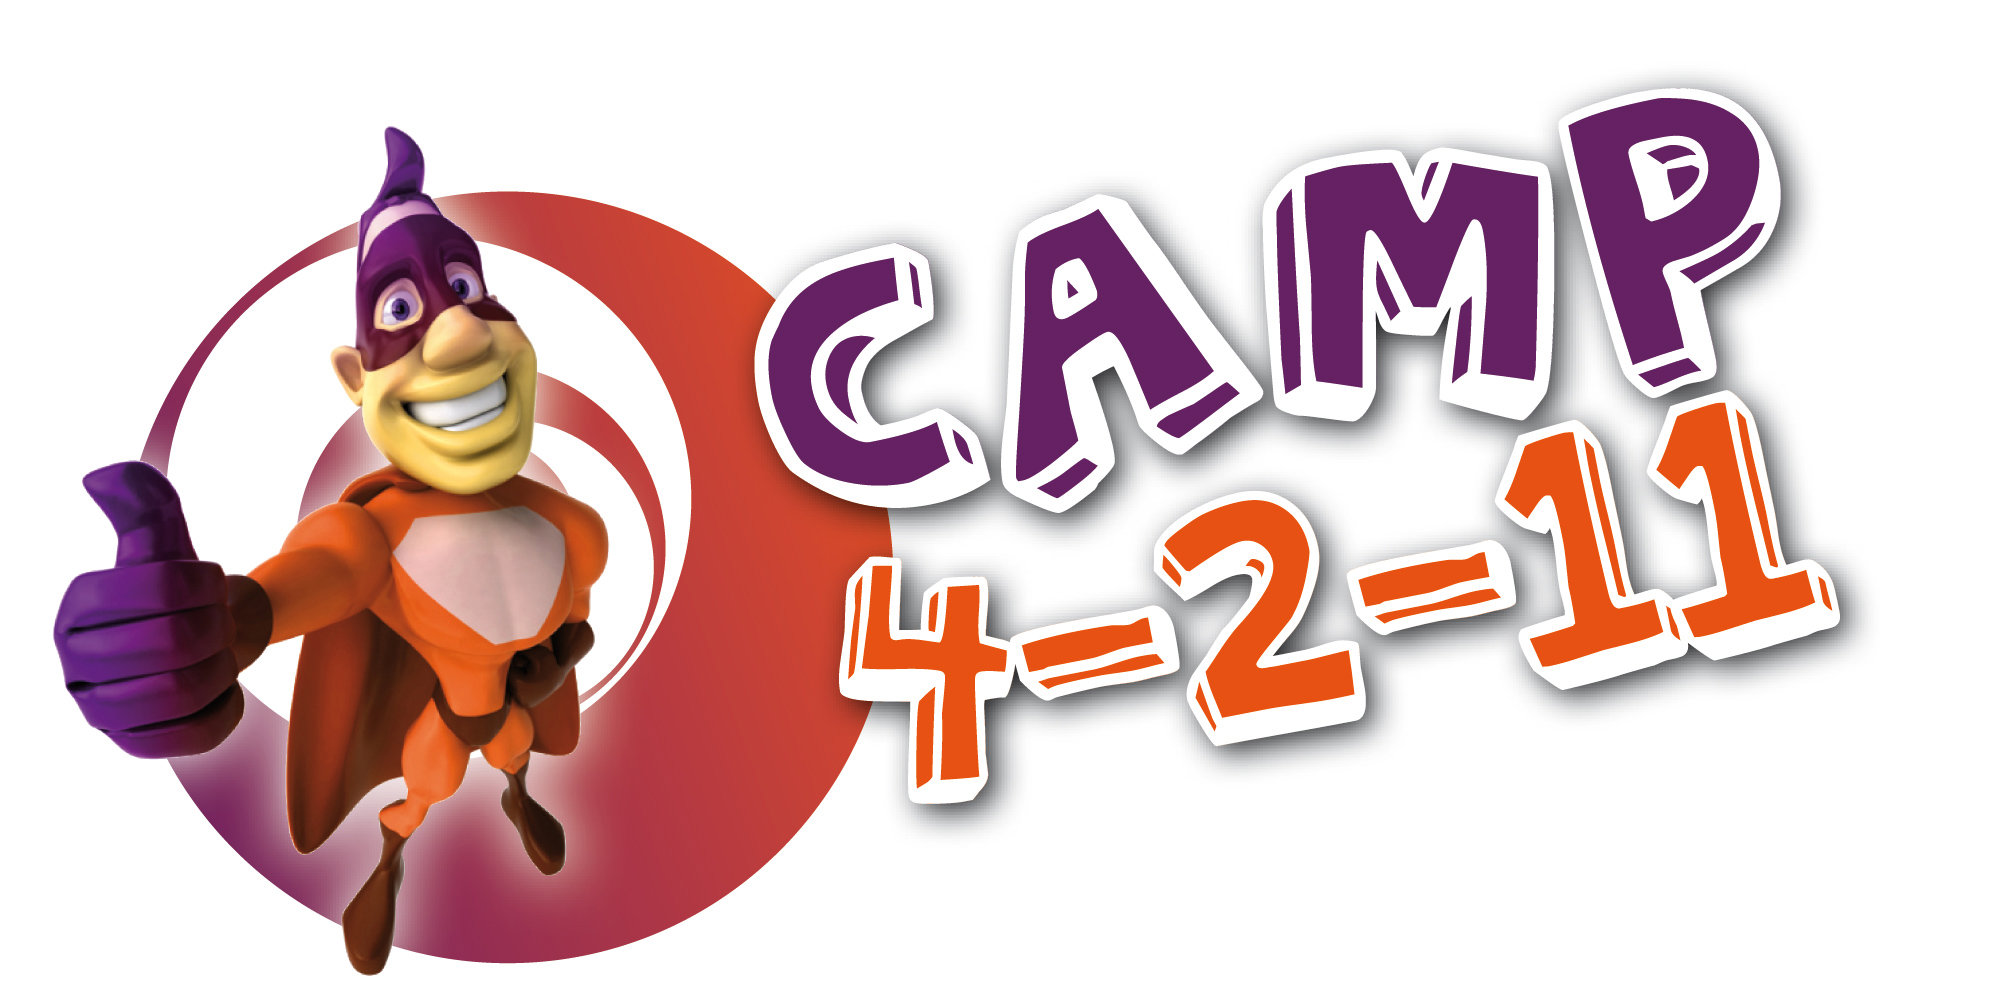 Camp 4-2-11